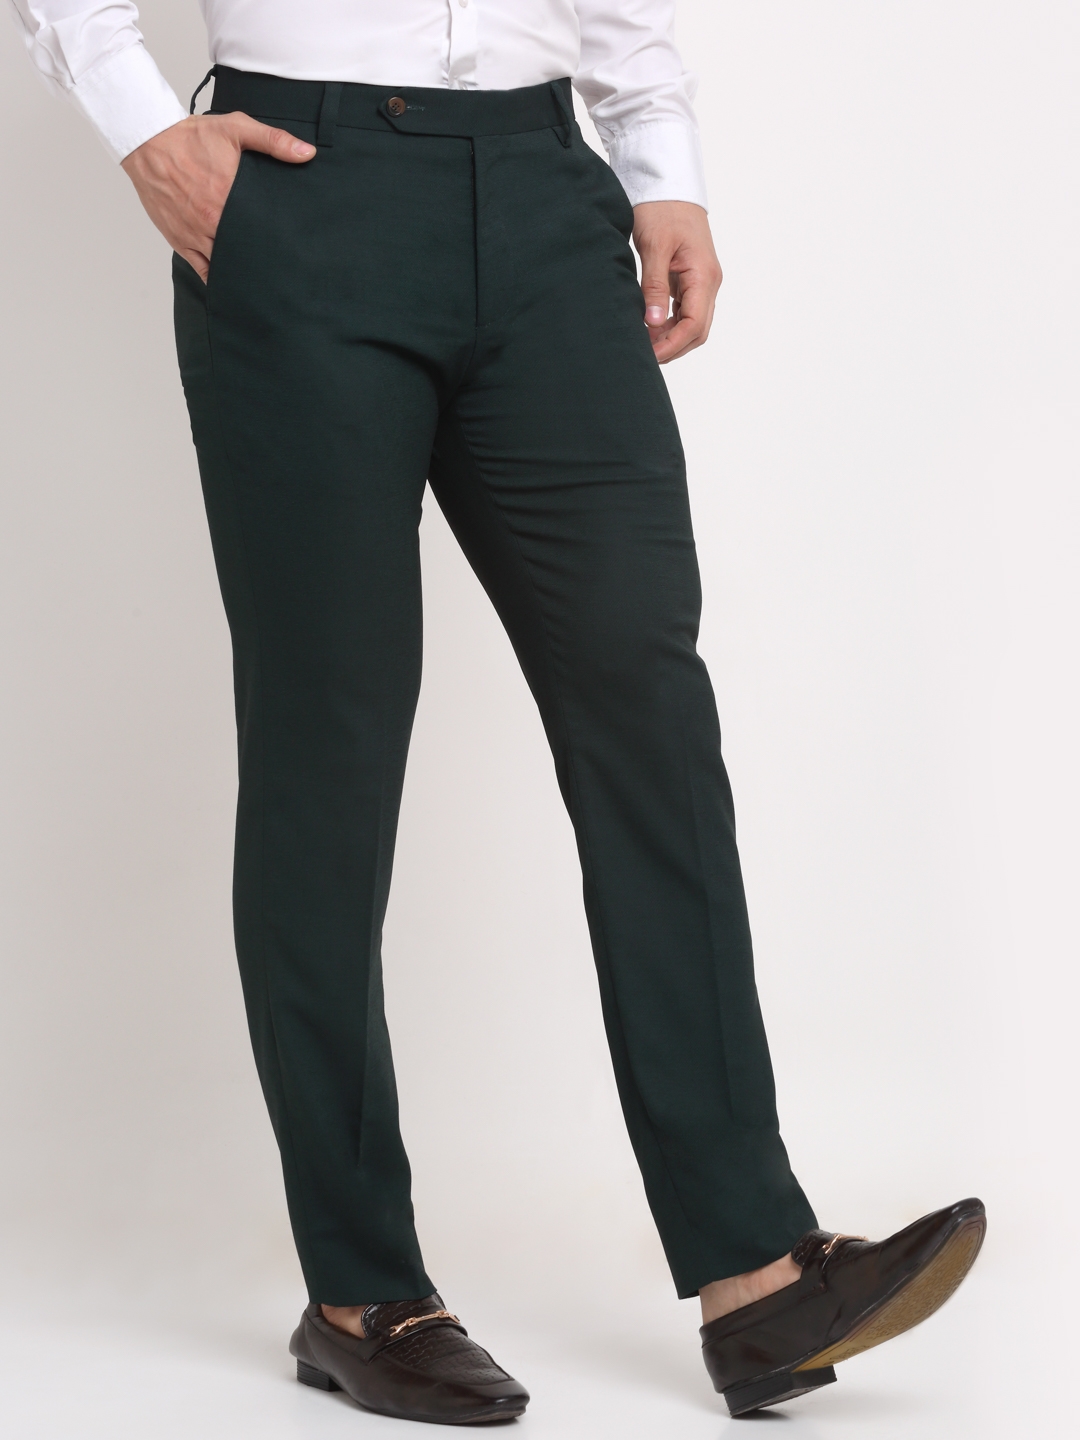 Men's Green Classic Slim Fit Comfortable Formal Trousers